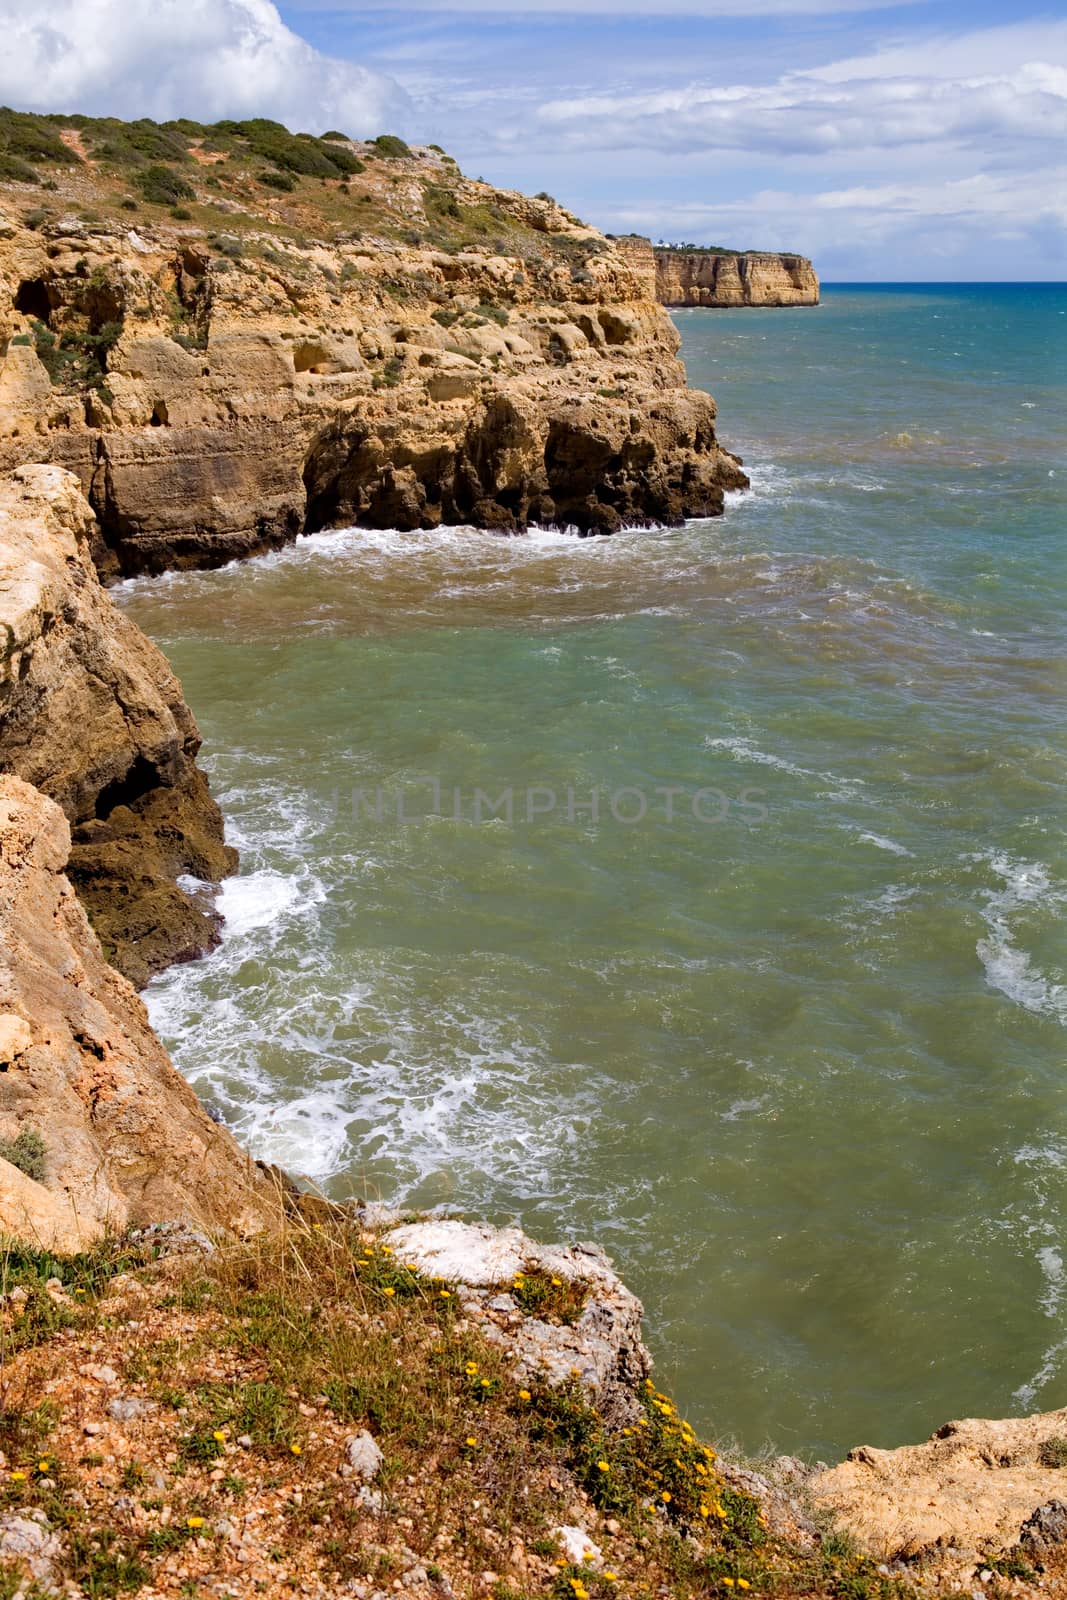 rocky coast of algarve, the south of portugal